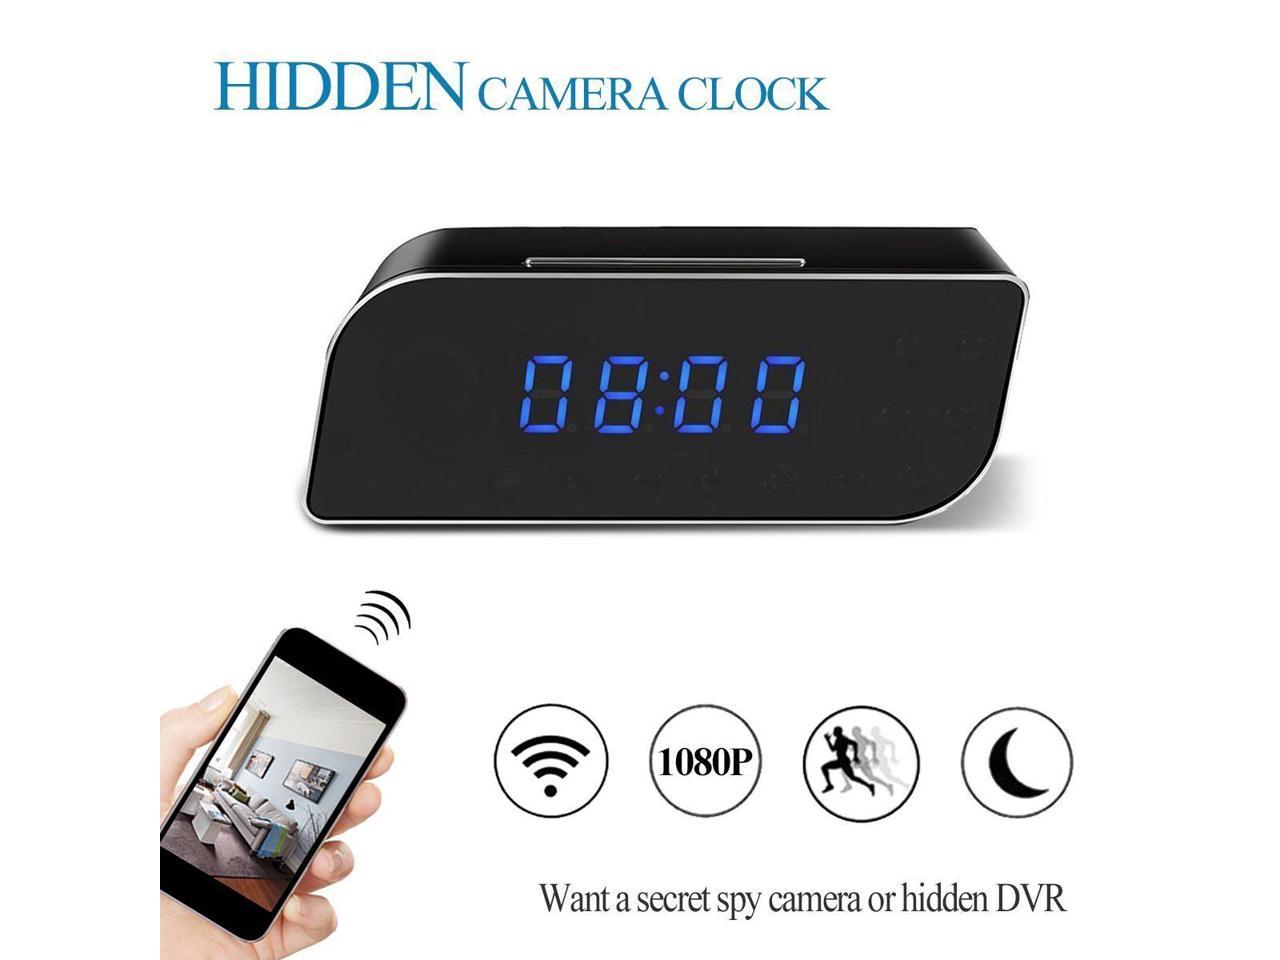 SecureGuard 1080P HD WiFi Wireless IP Wall Clock Hidden Security Nanny Cam Spy Camera Long 1 Year Battery Life Model